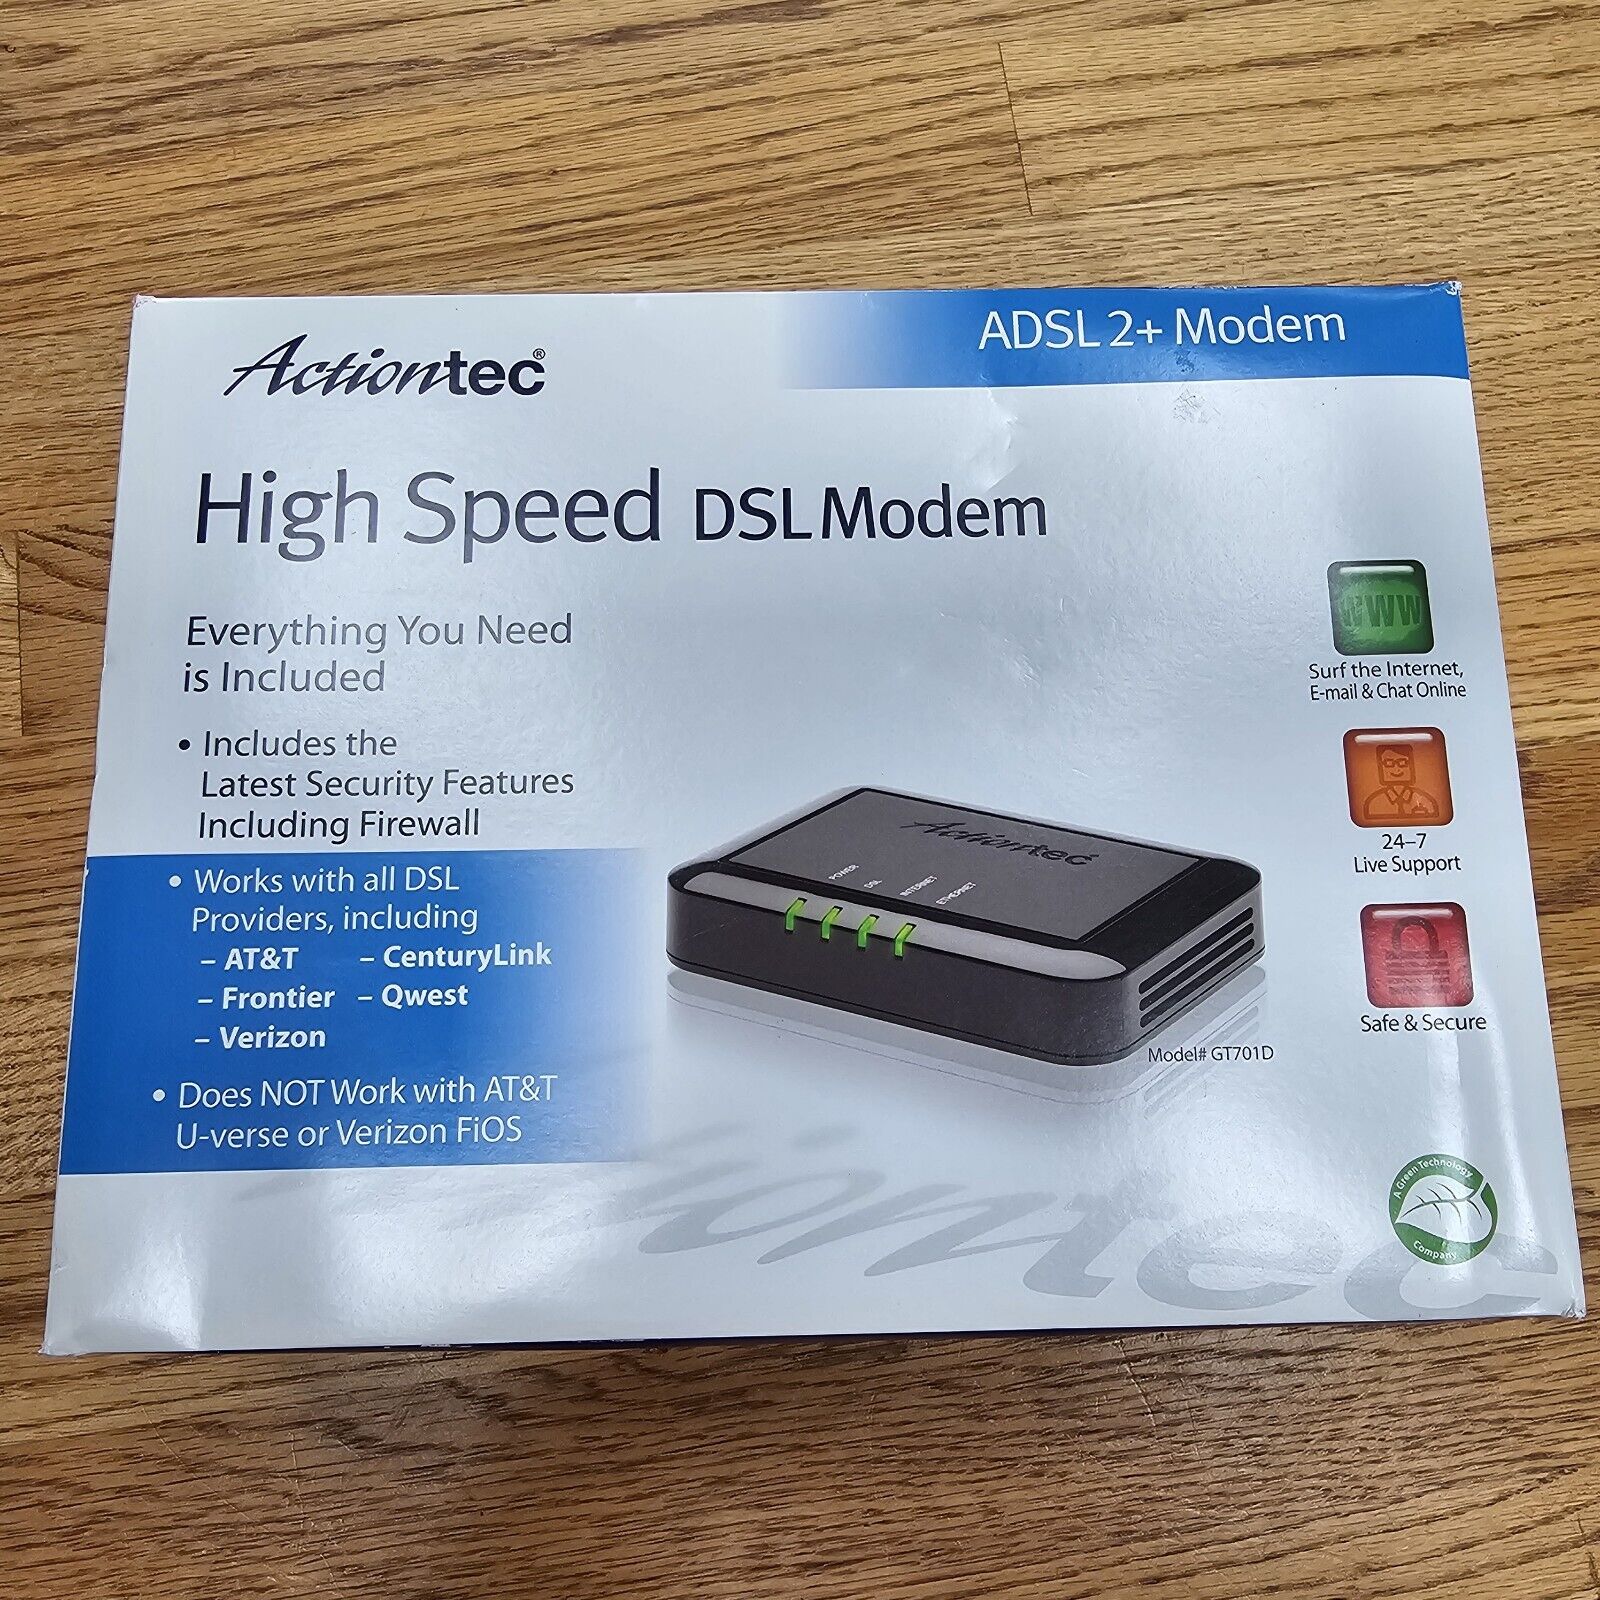 Actiontec GT701D Ethernet DSL Modem with Routing Capabilities ADSL 2+ Modem